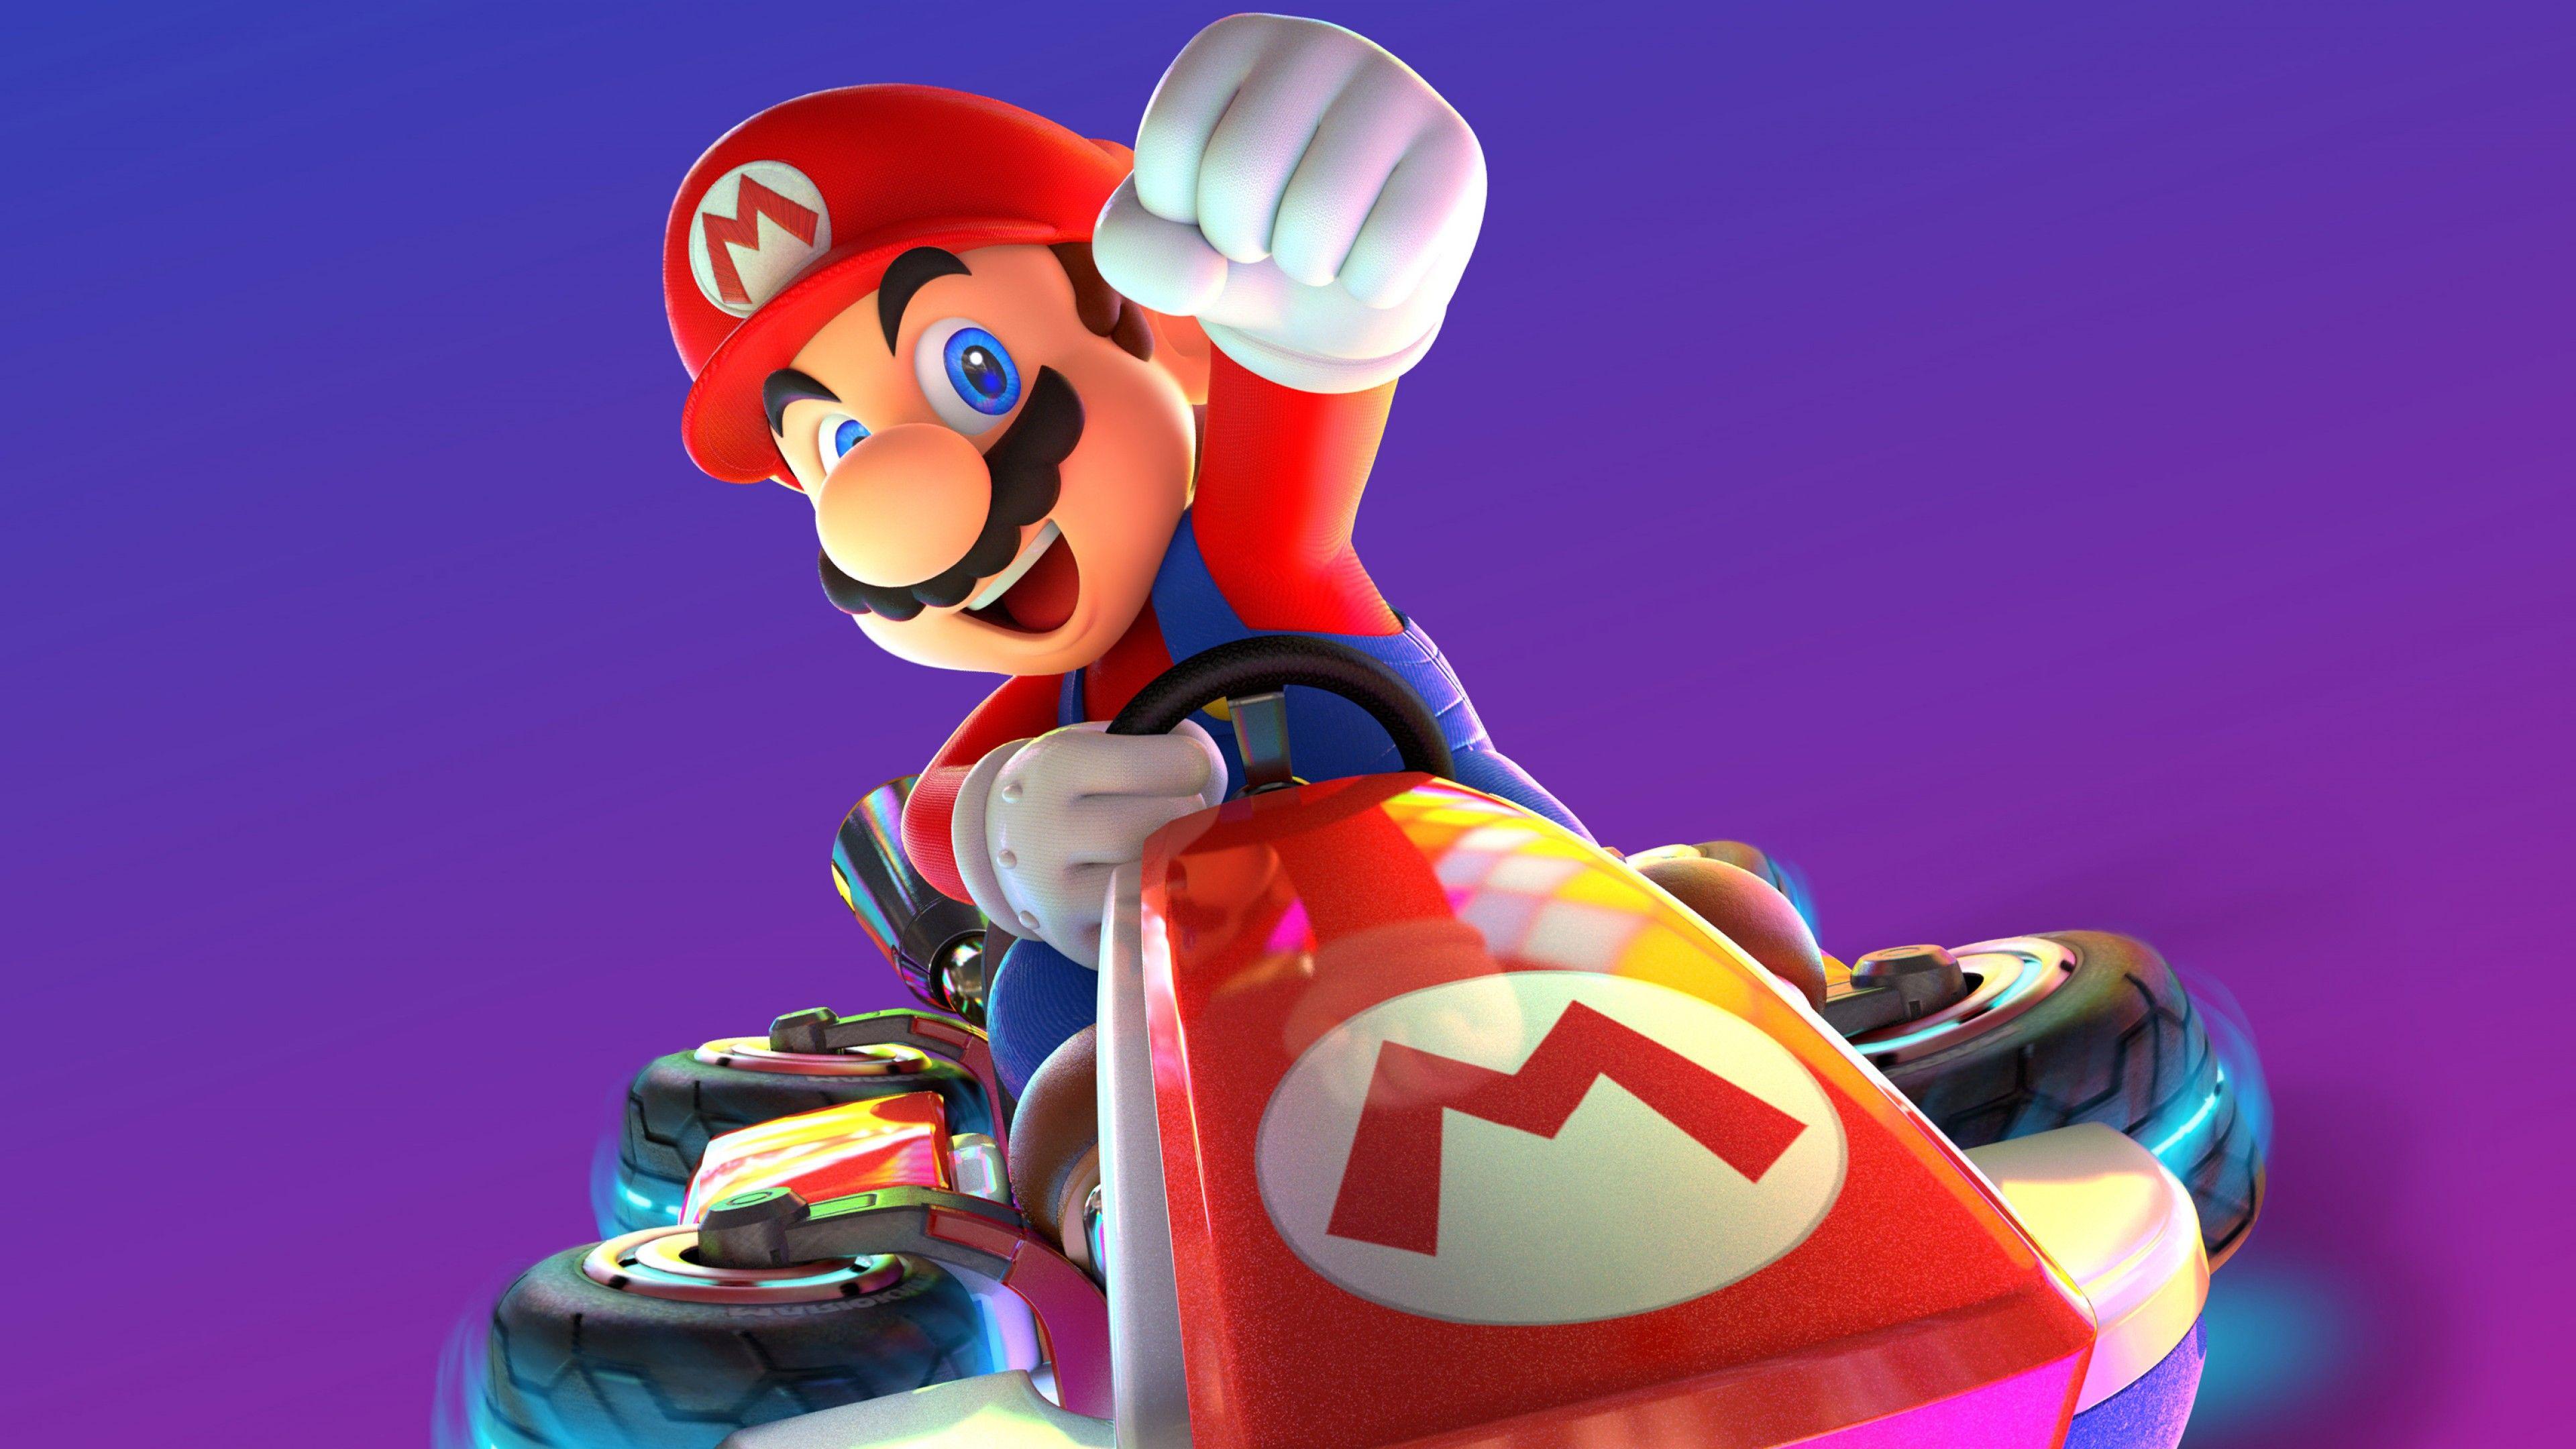 Wallpaper Mario Kart Nintendo Switch, Games